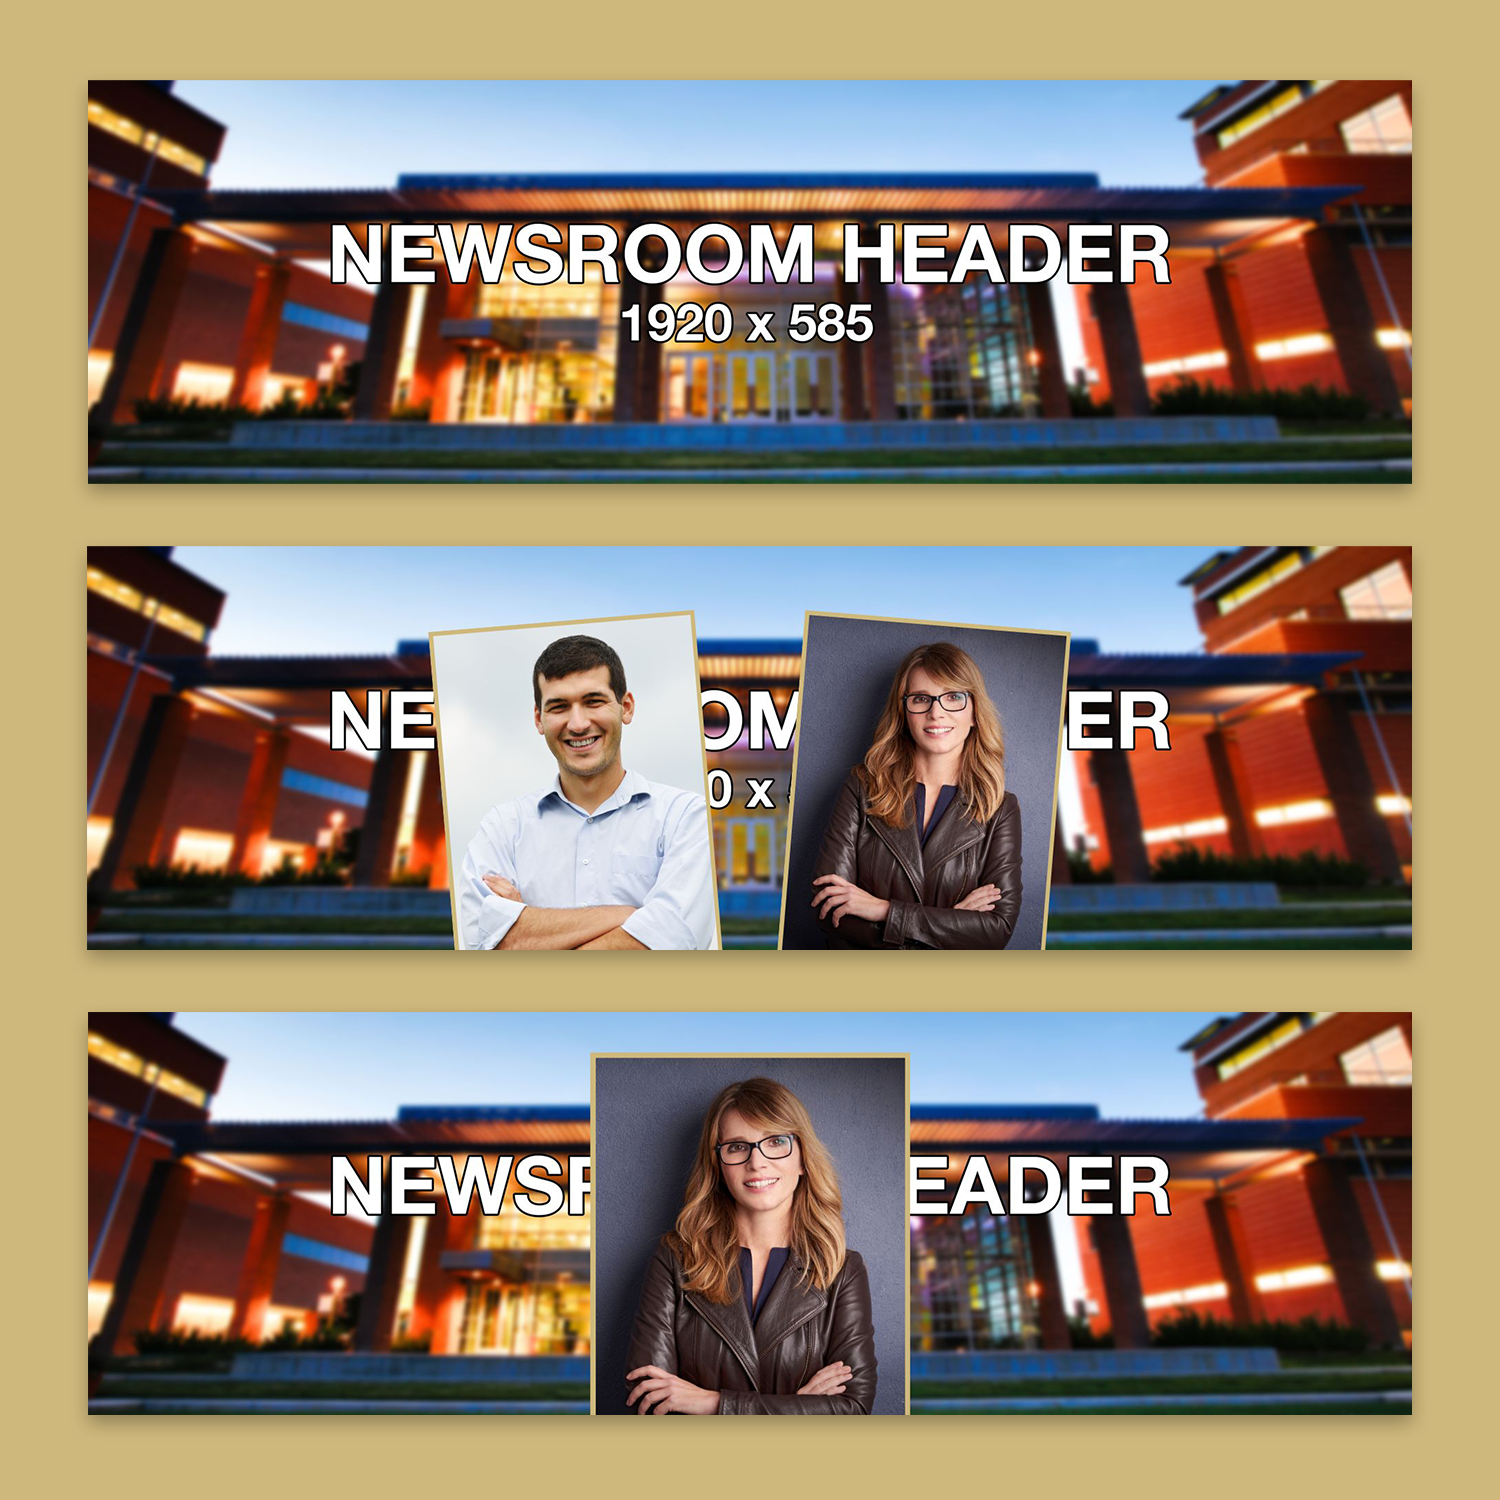 Newsroom-header